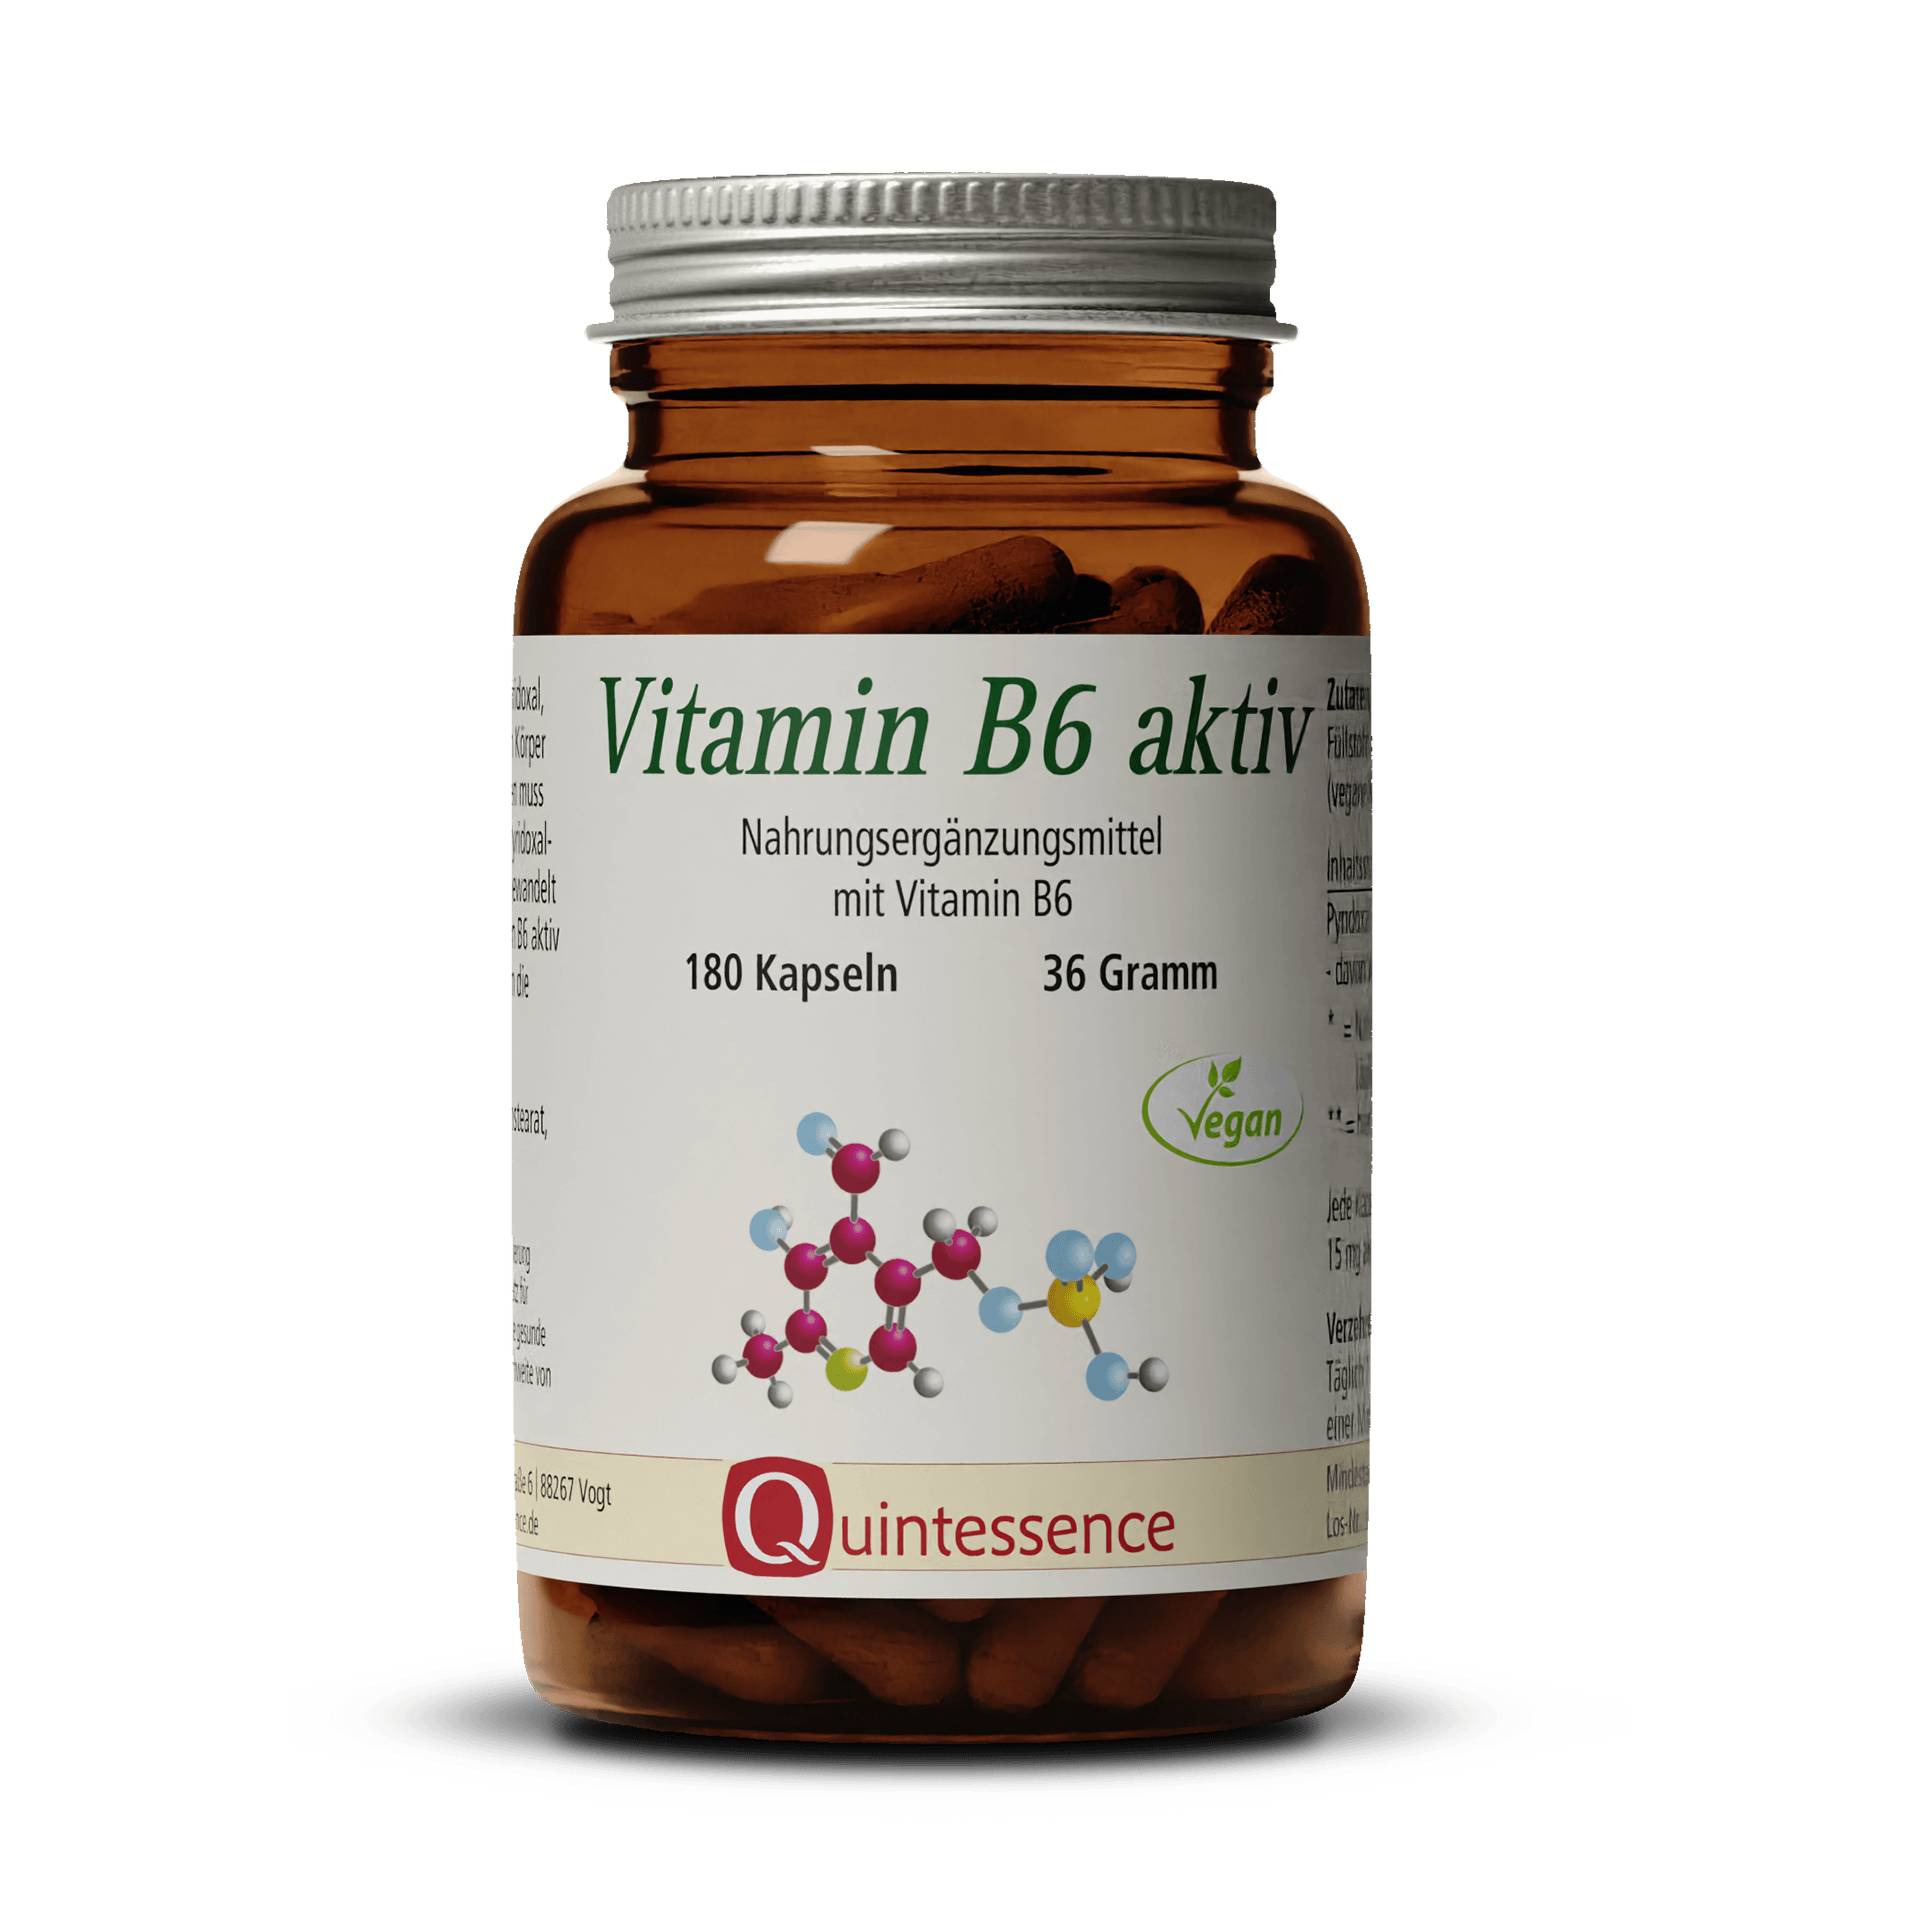 Vitamin B6 aktiv, 180 Kapseln von Quintessence